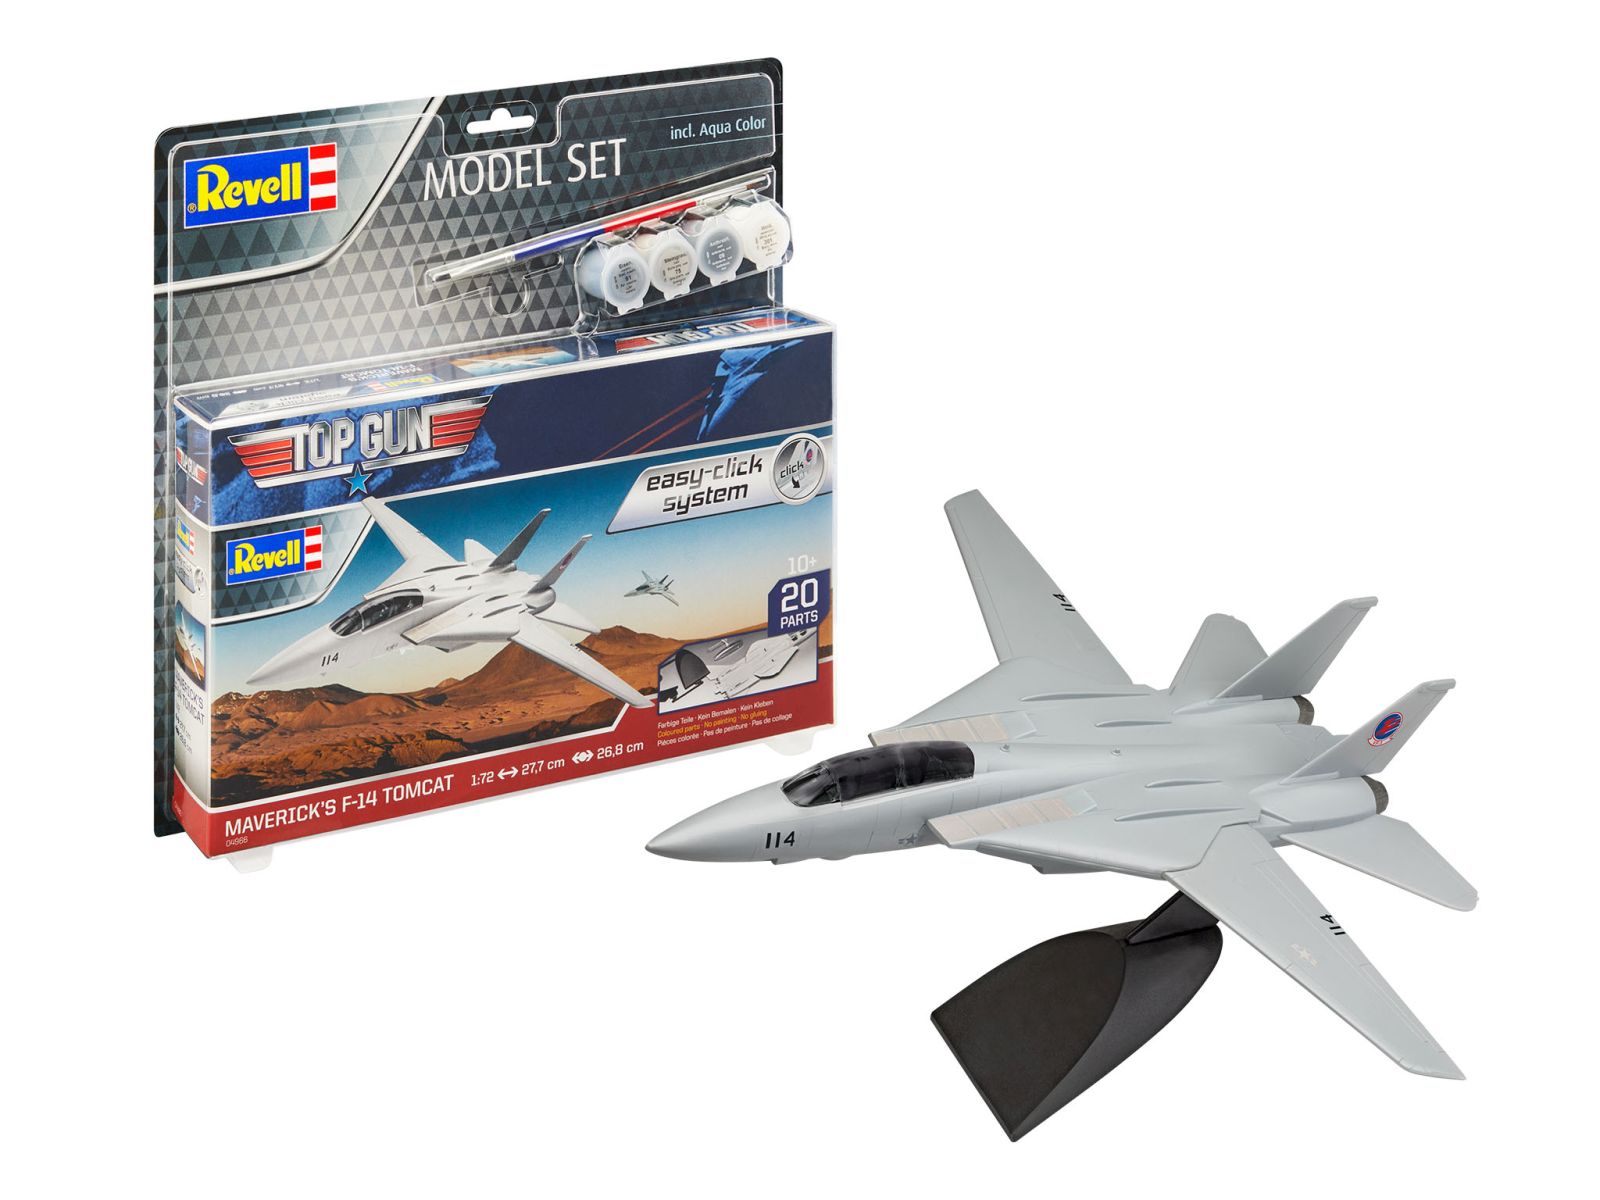 Revell 64966 - Model Set F-14 Tomcat "Top Gun" easy-click-system